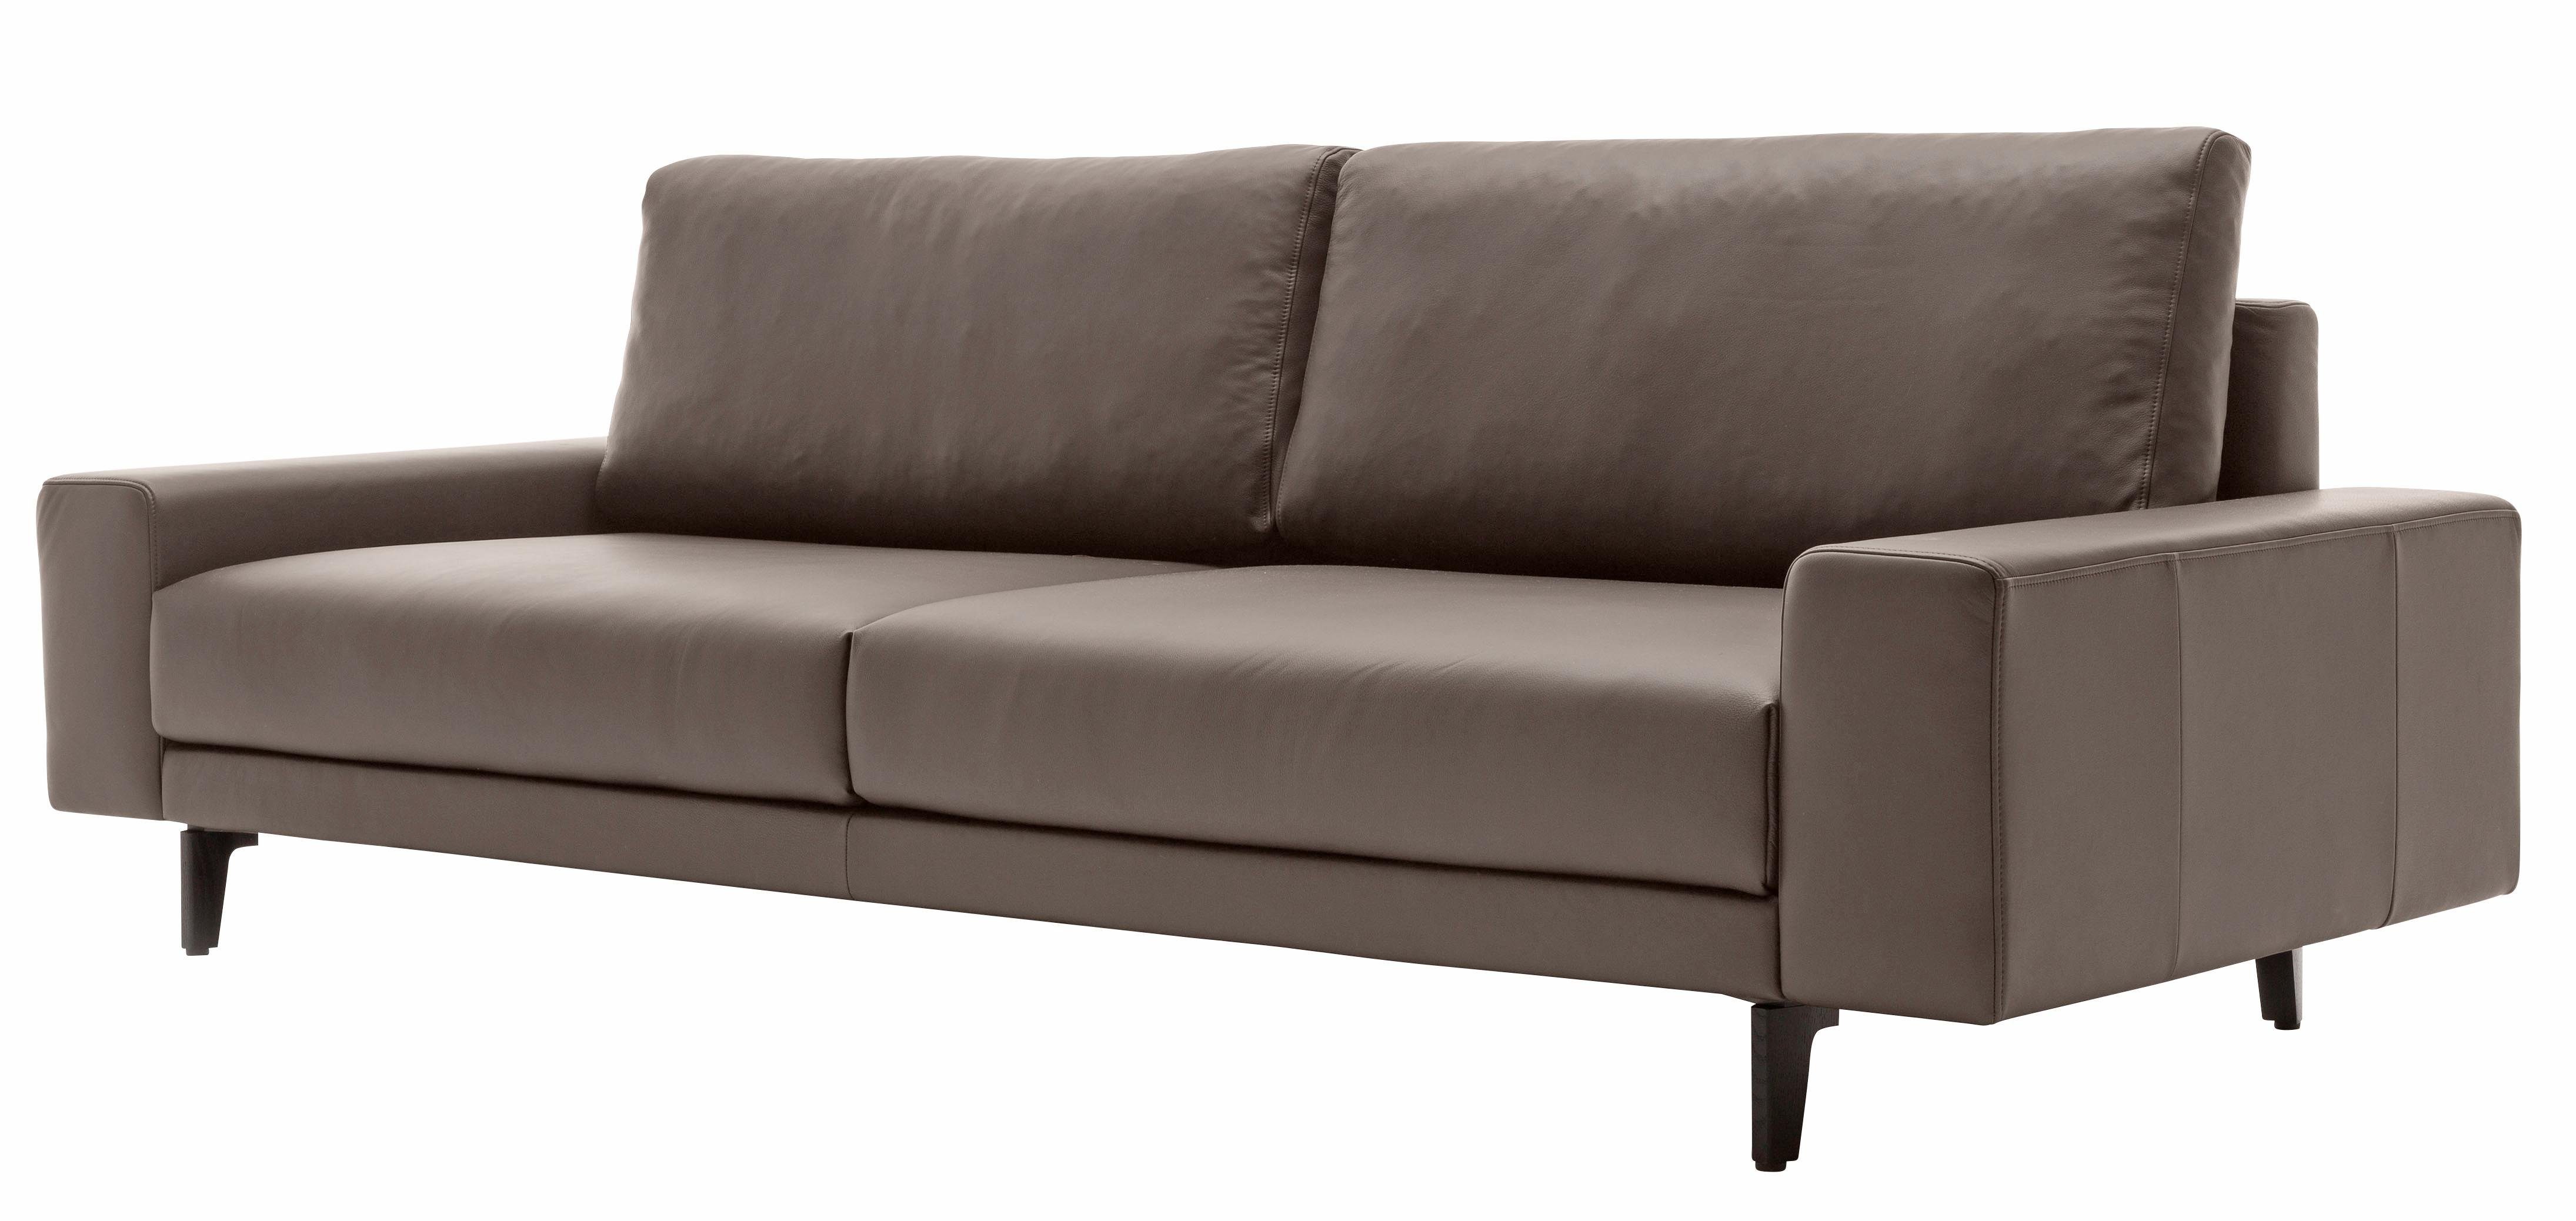 Breite Armlehne in breit 220 3-Sitzer hs.450, cm niedrig, umbragrau, sofa Alugussfüße hülsta